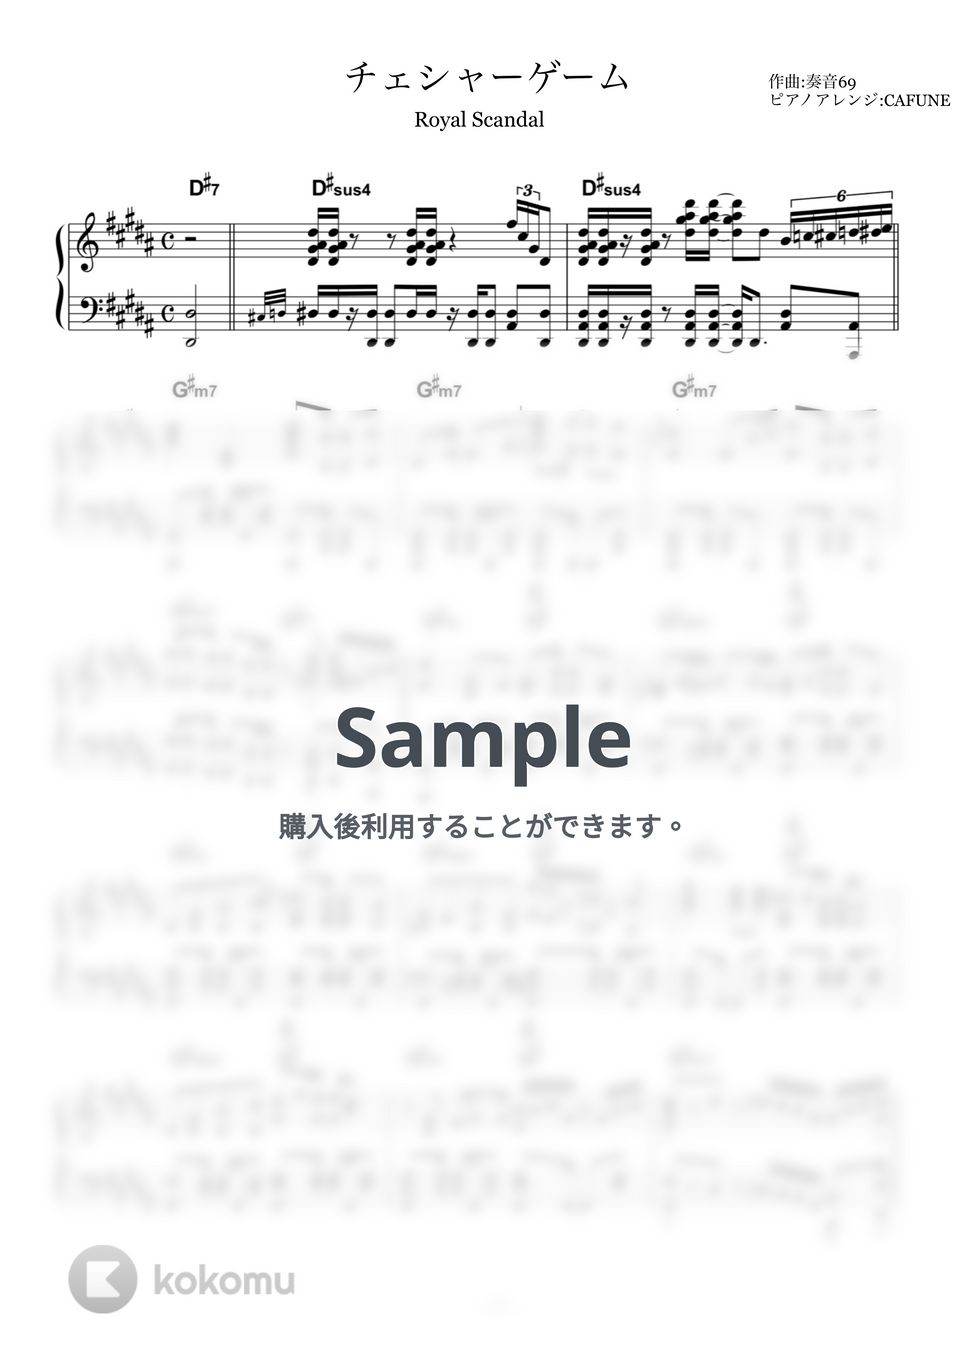 Royal Scandal - チェシャーゲーム (奏音69/ピアノソロ/コード有/royalscandal) by CAFUNE-かふね-